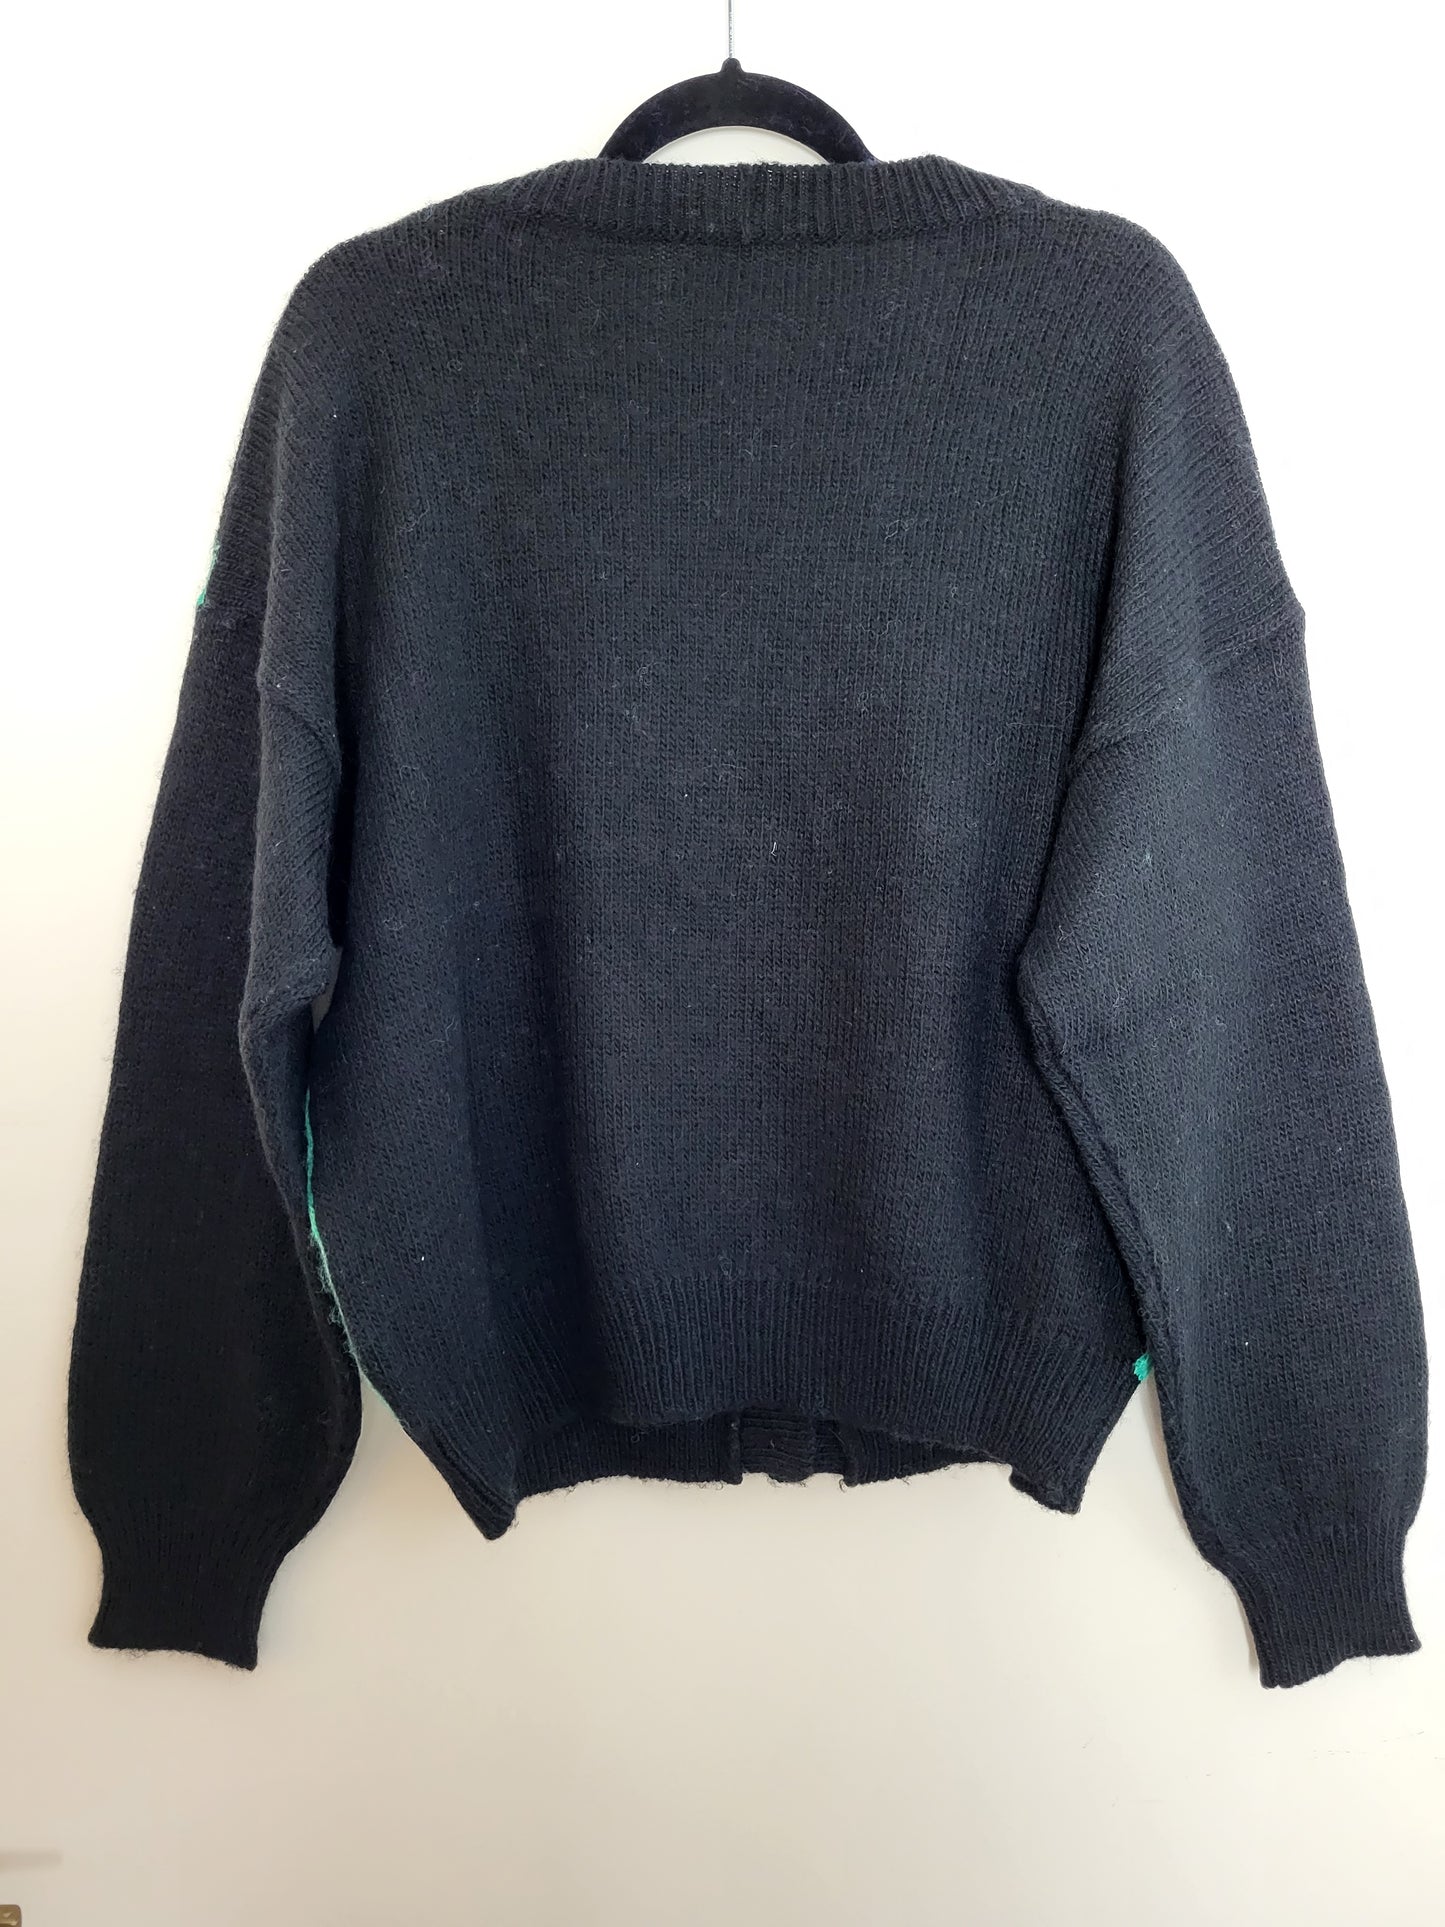 Vintage - Pullover/Cardigan - Muster - Vintage Wolle - Bunt - Damen - L/XL